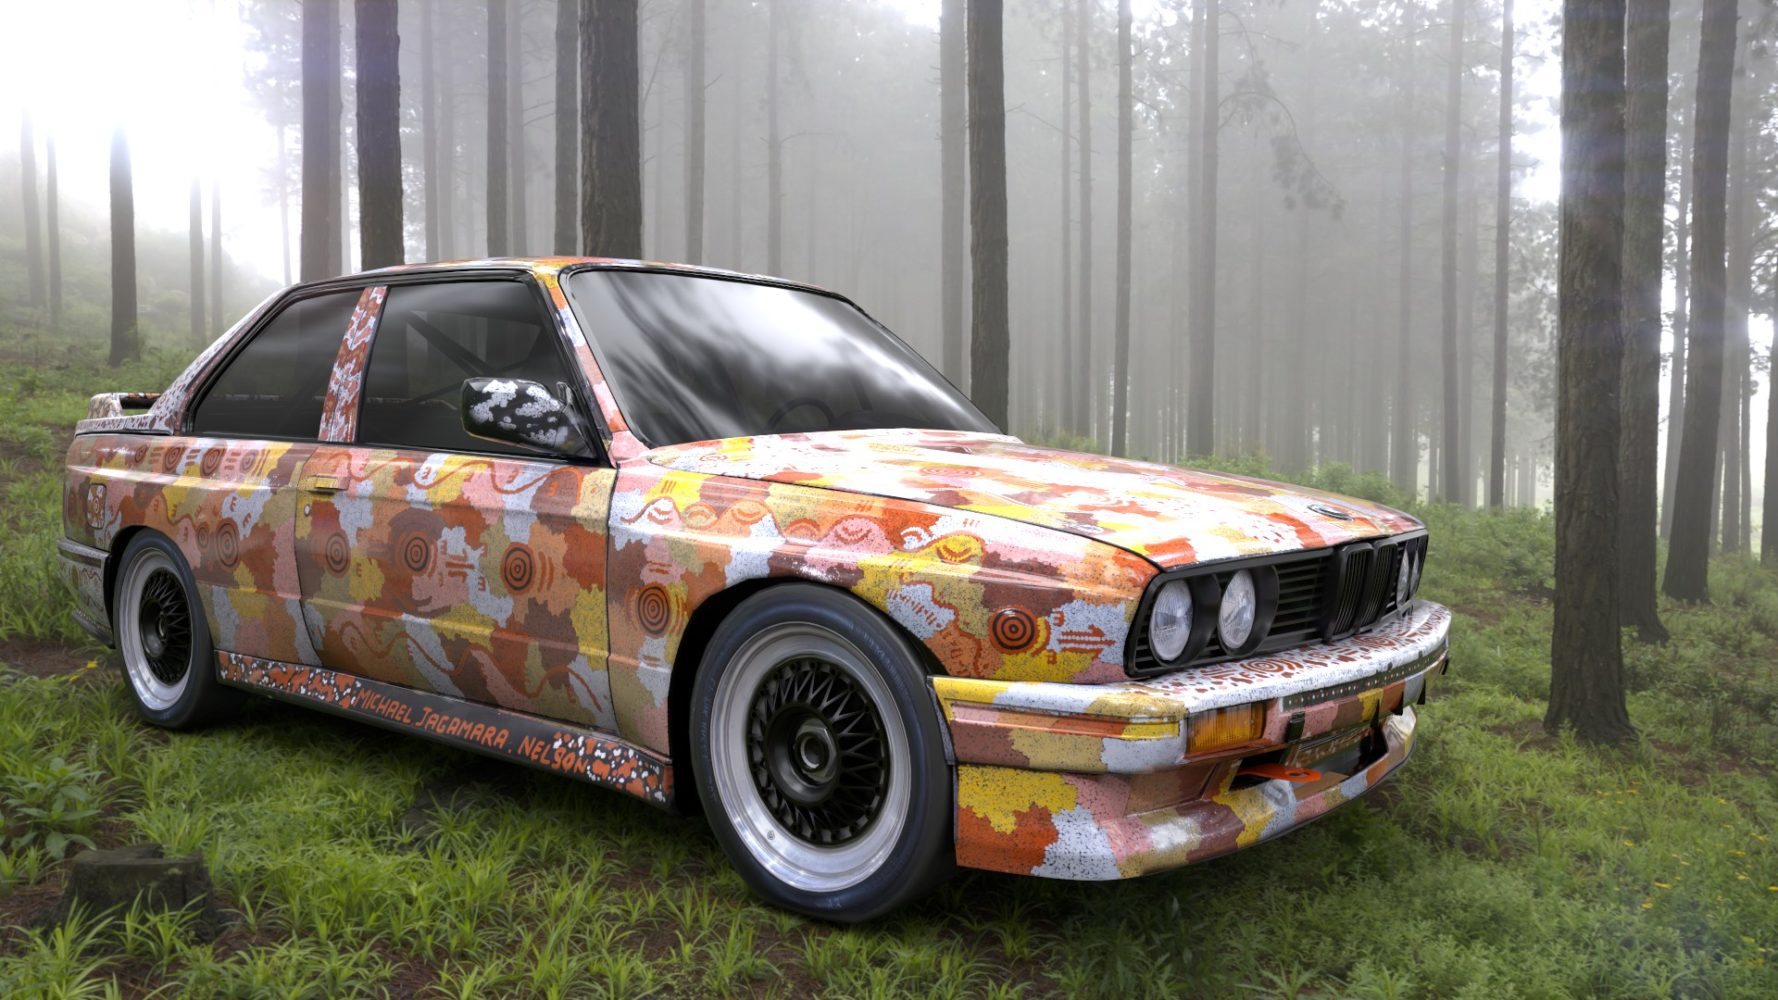 Michael Jagamara Nelson for BMW Art Cars